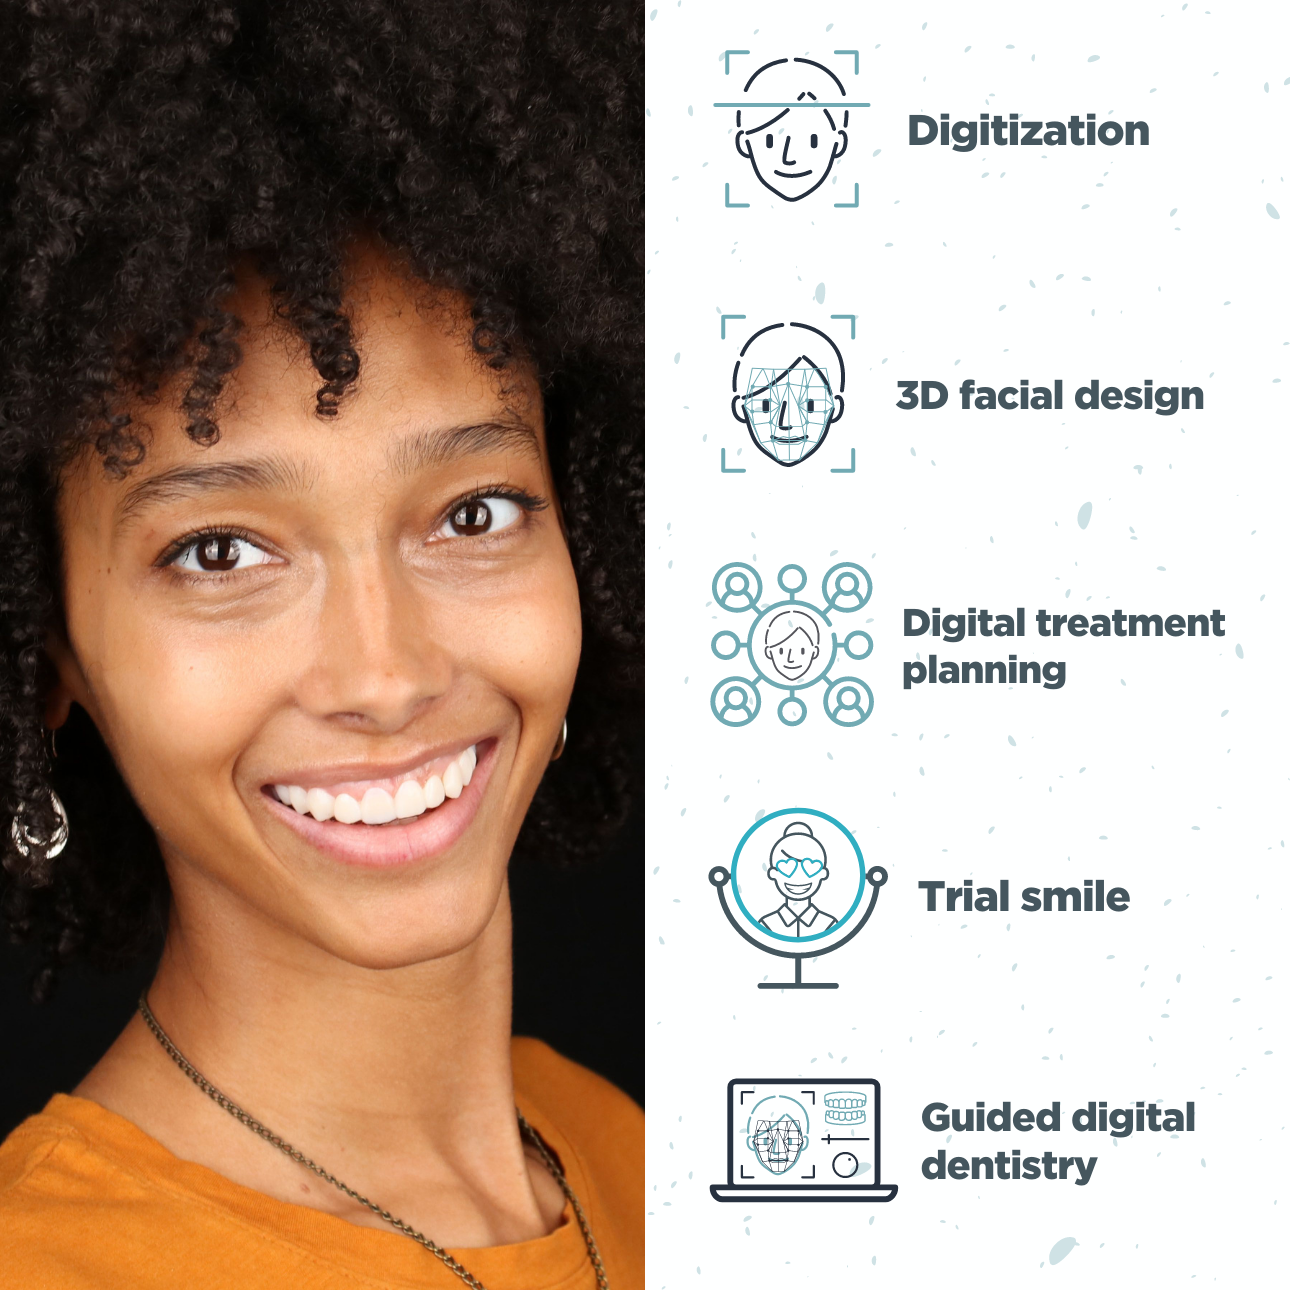 5. Guided digital dentistry (1)